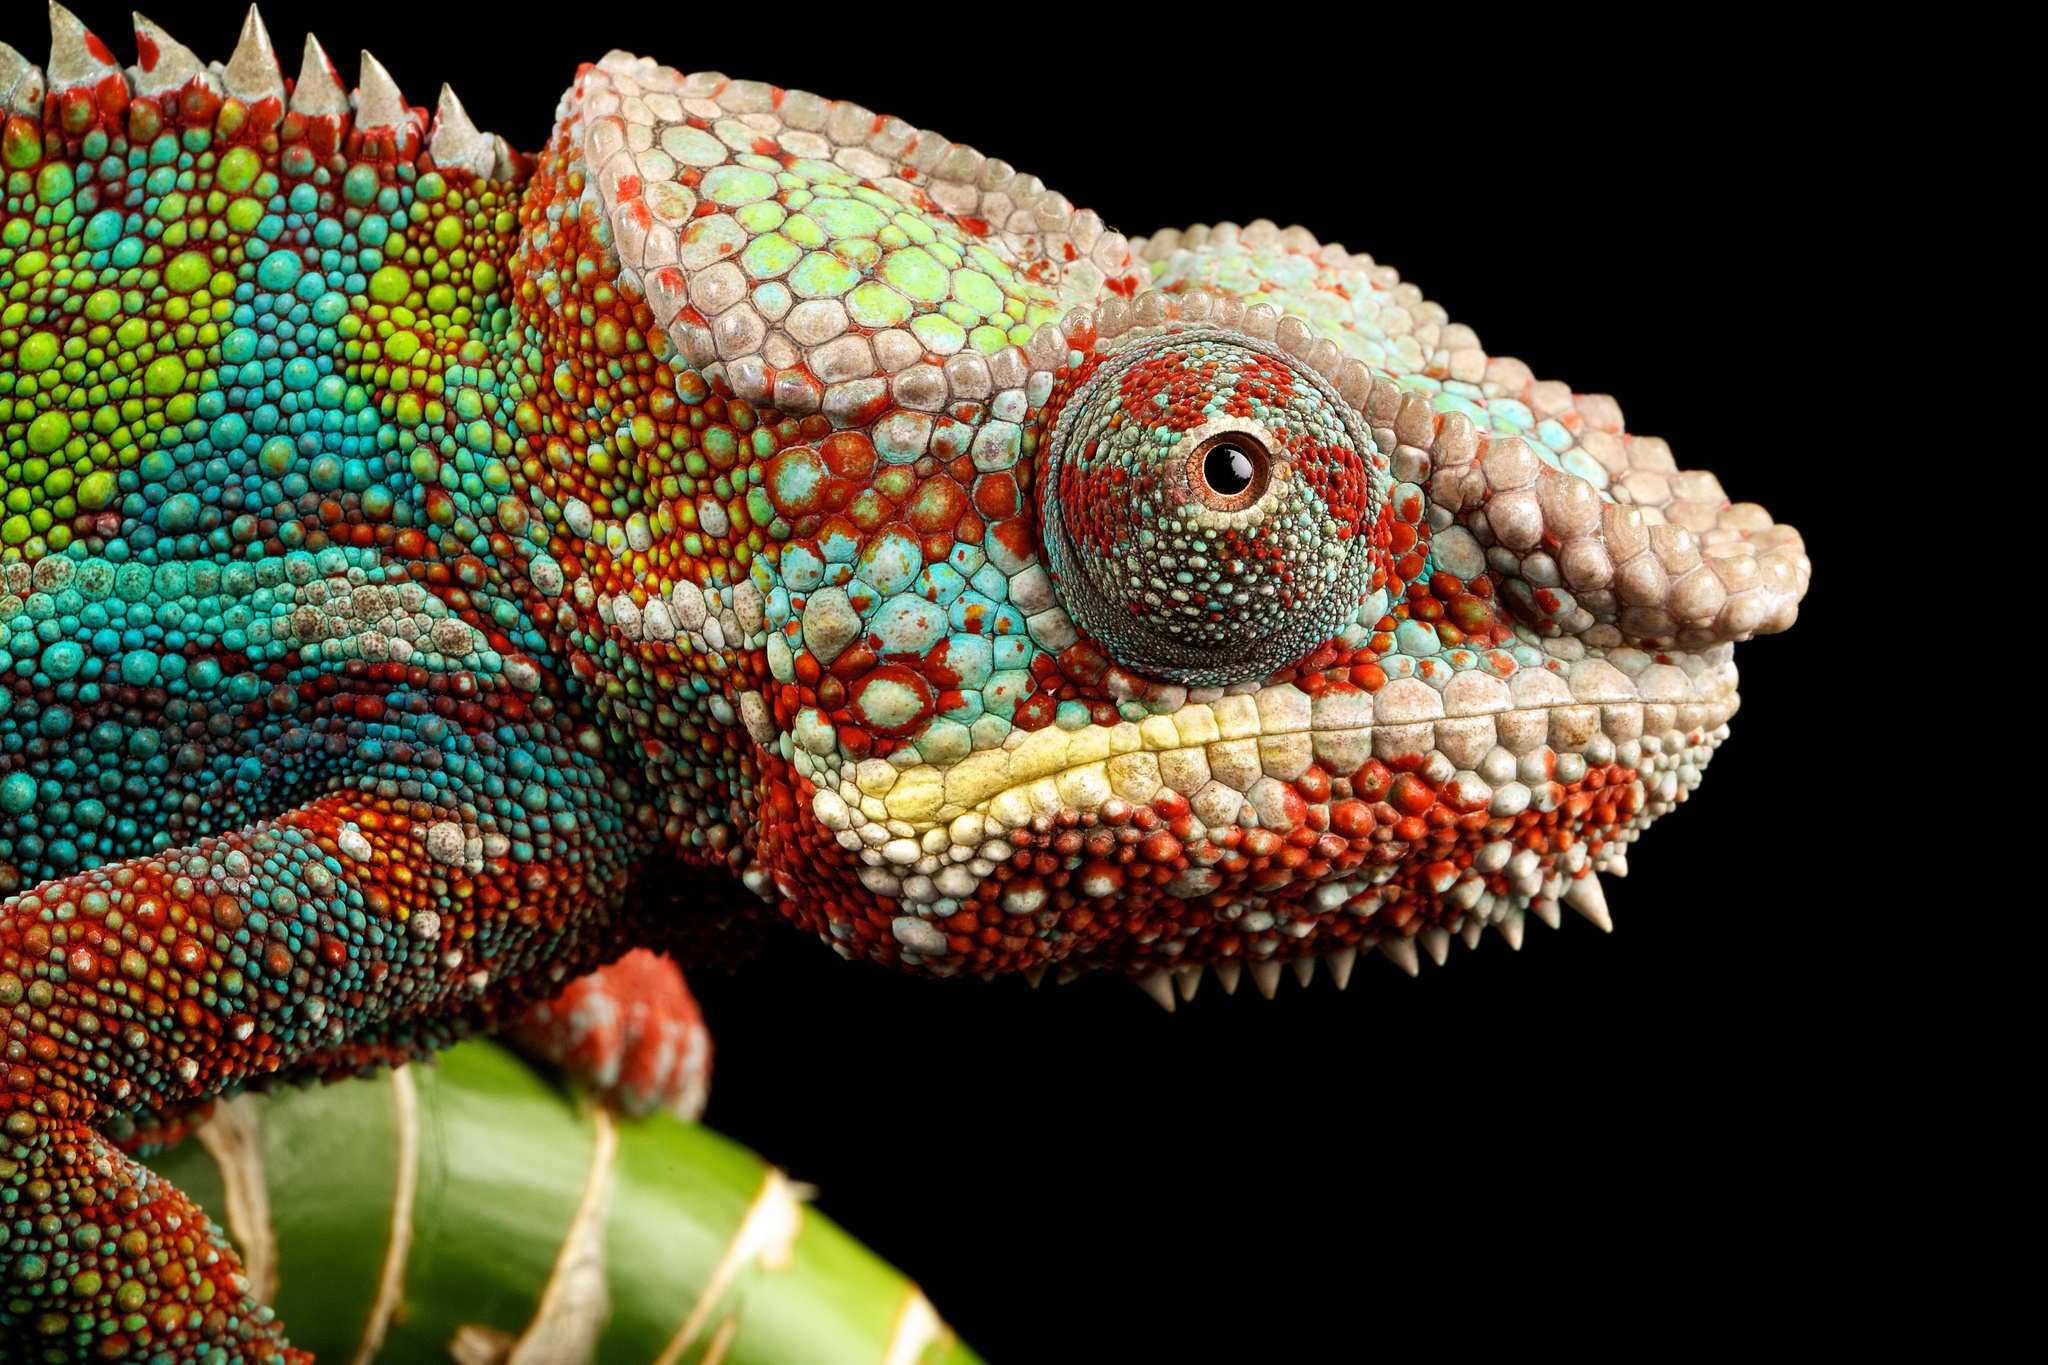 Wallpapers reptile look chameleon on the desktop